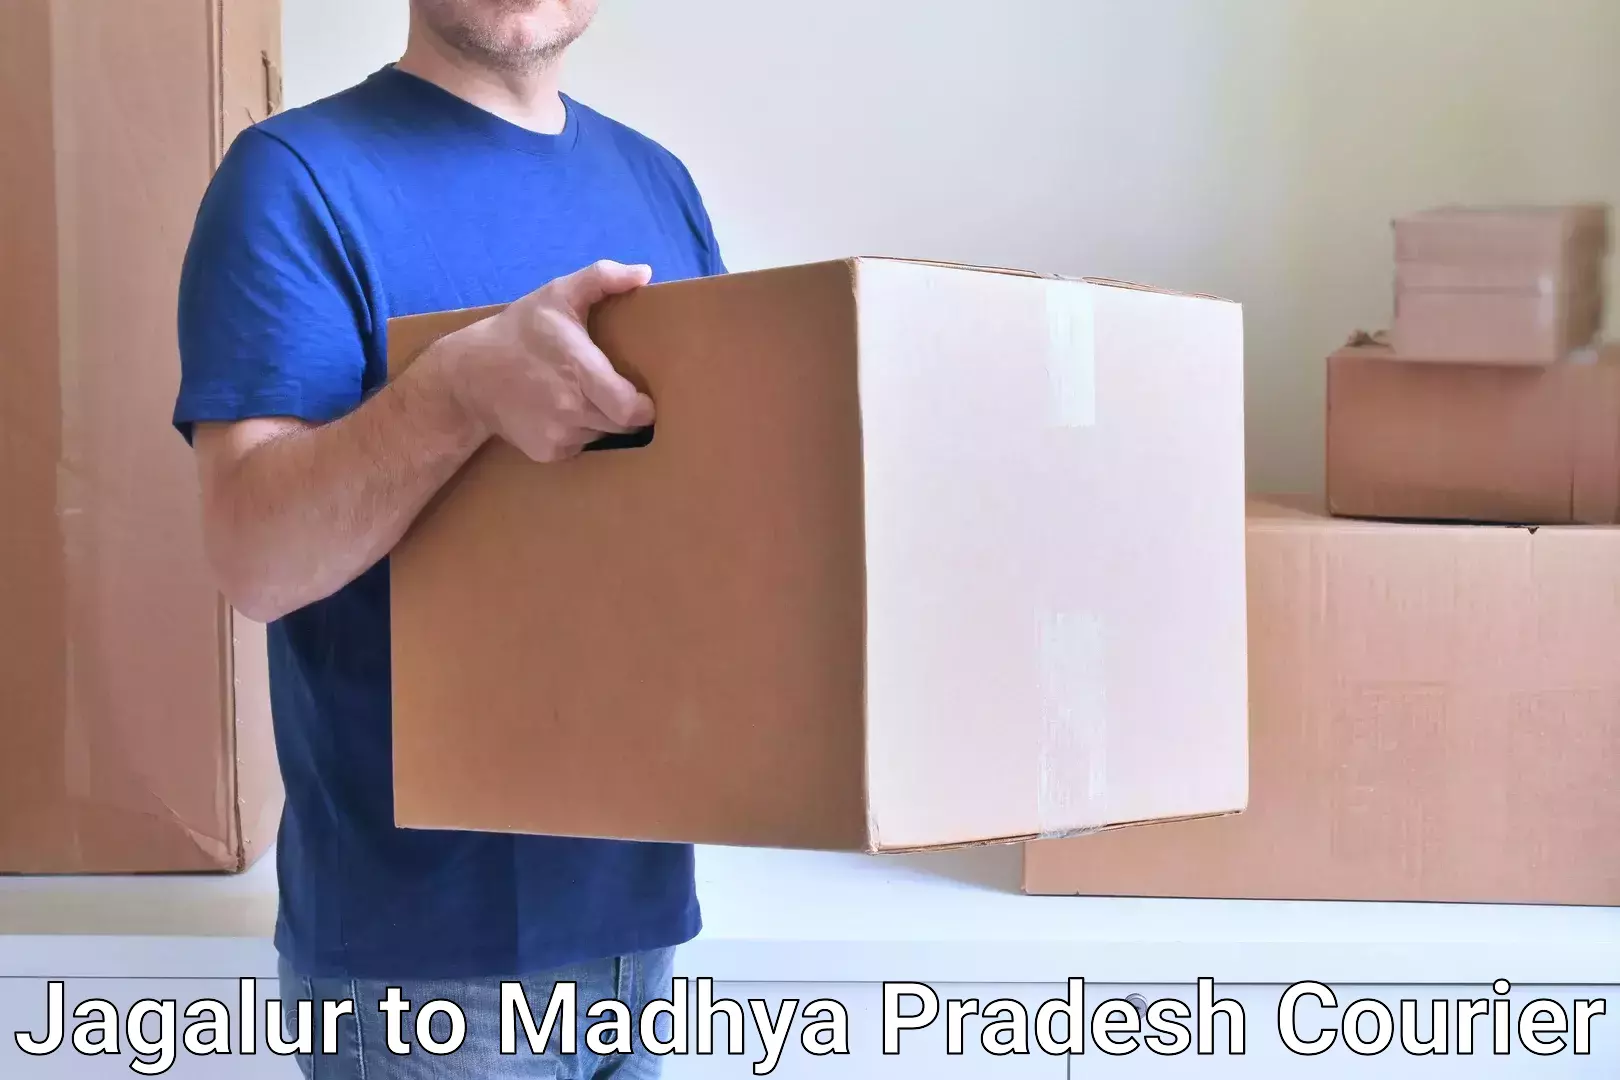 Professional courier services Jagalur to Vidisha